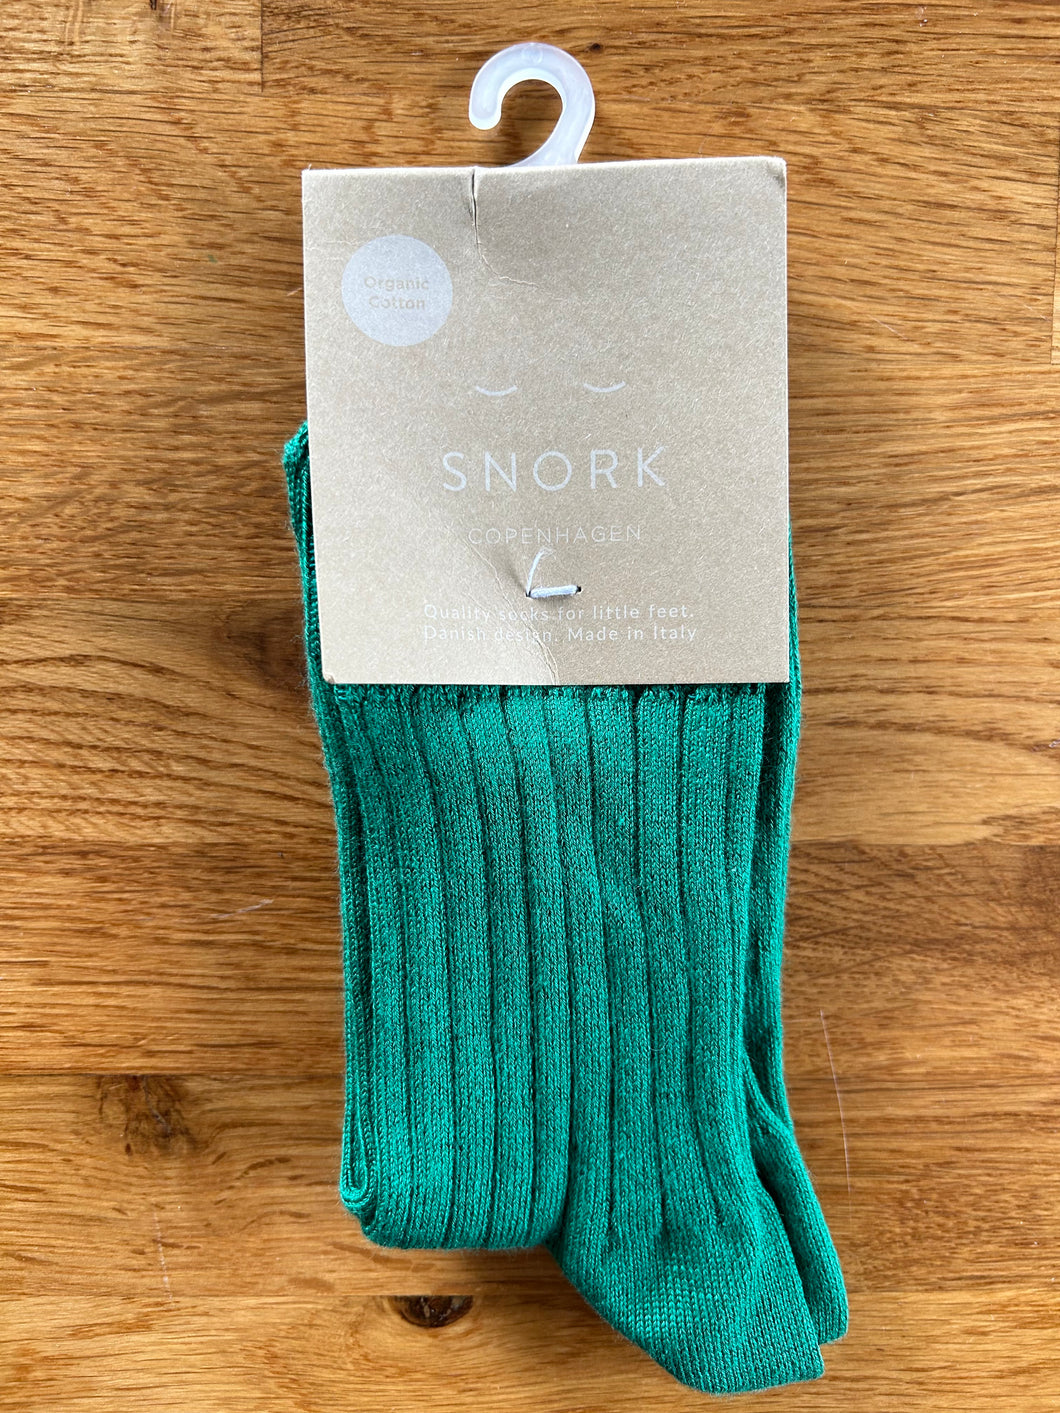 Green socks  uk 8.5-10 (eu 25-27)